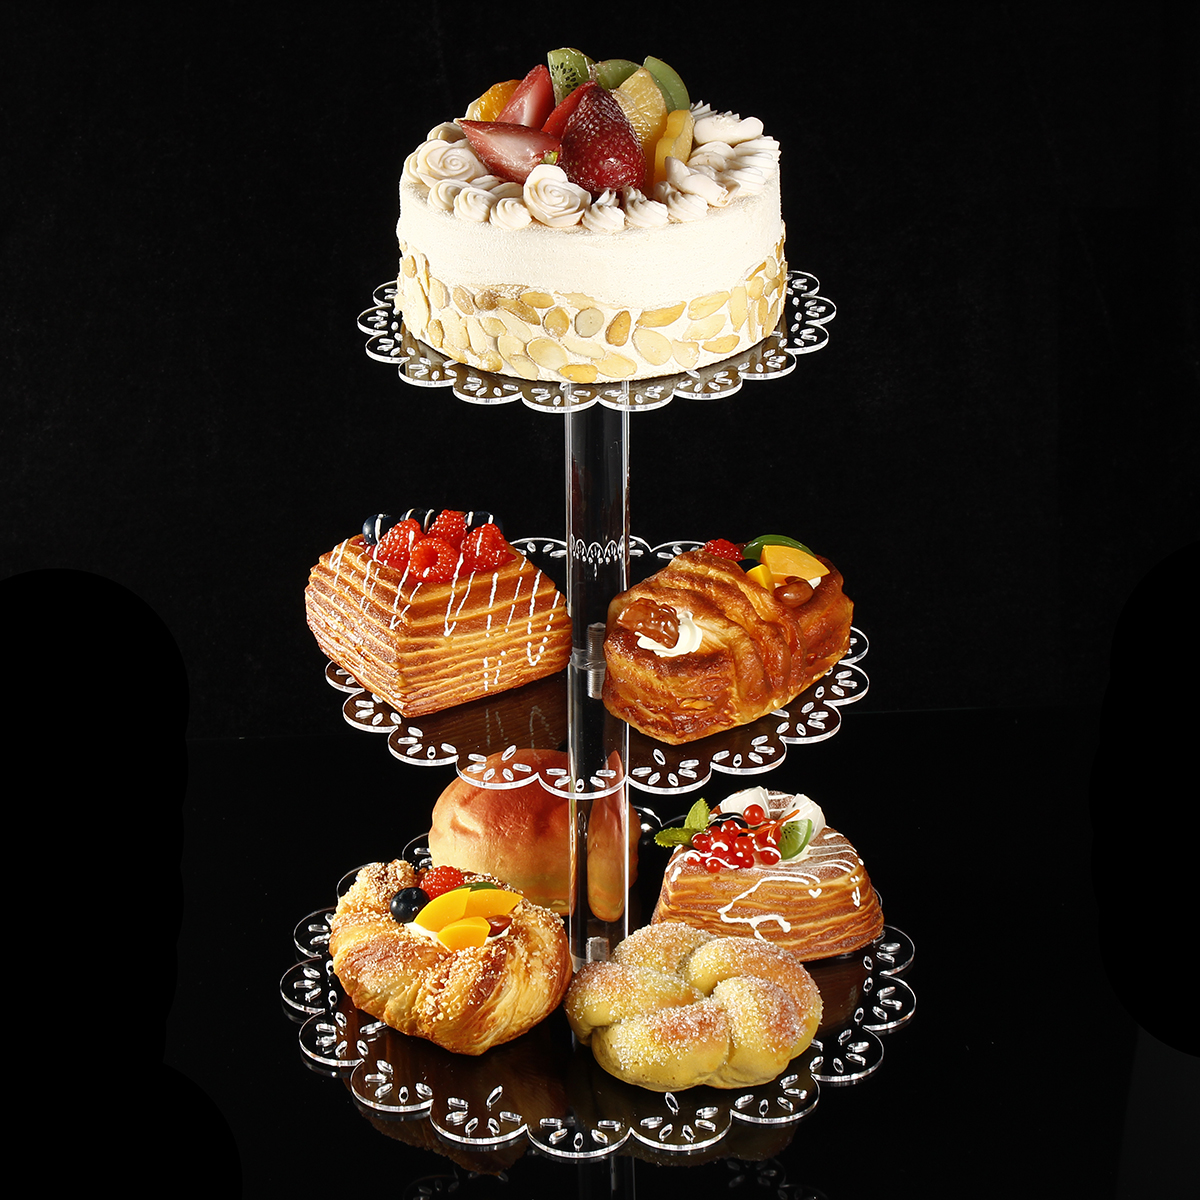 

3 Tier Acrylic Cake Stand Storage Rack Dessert Display Holder Wedding Party Decorations